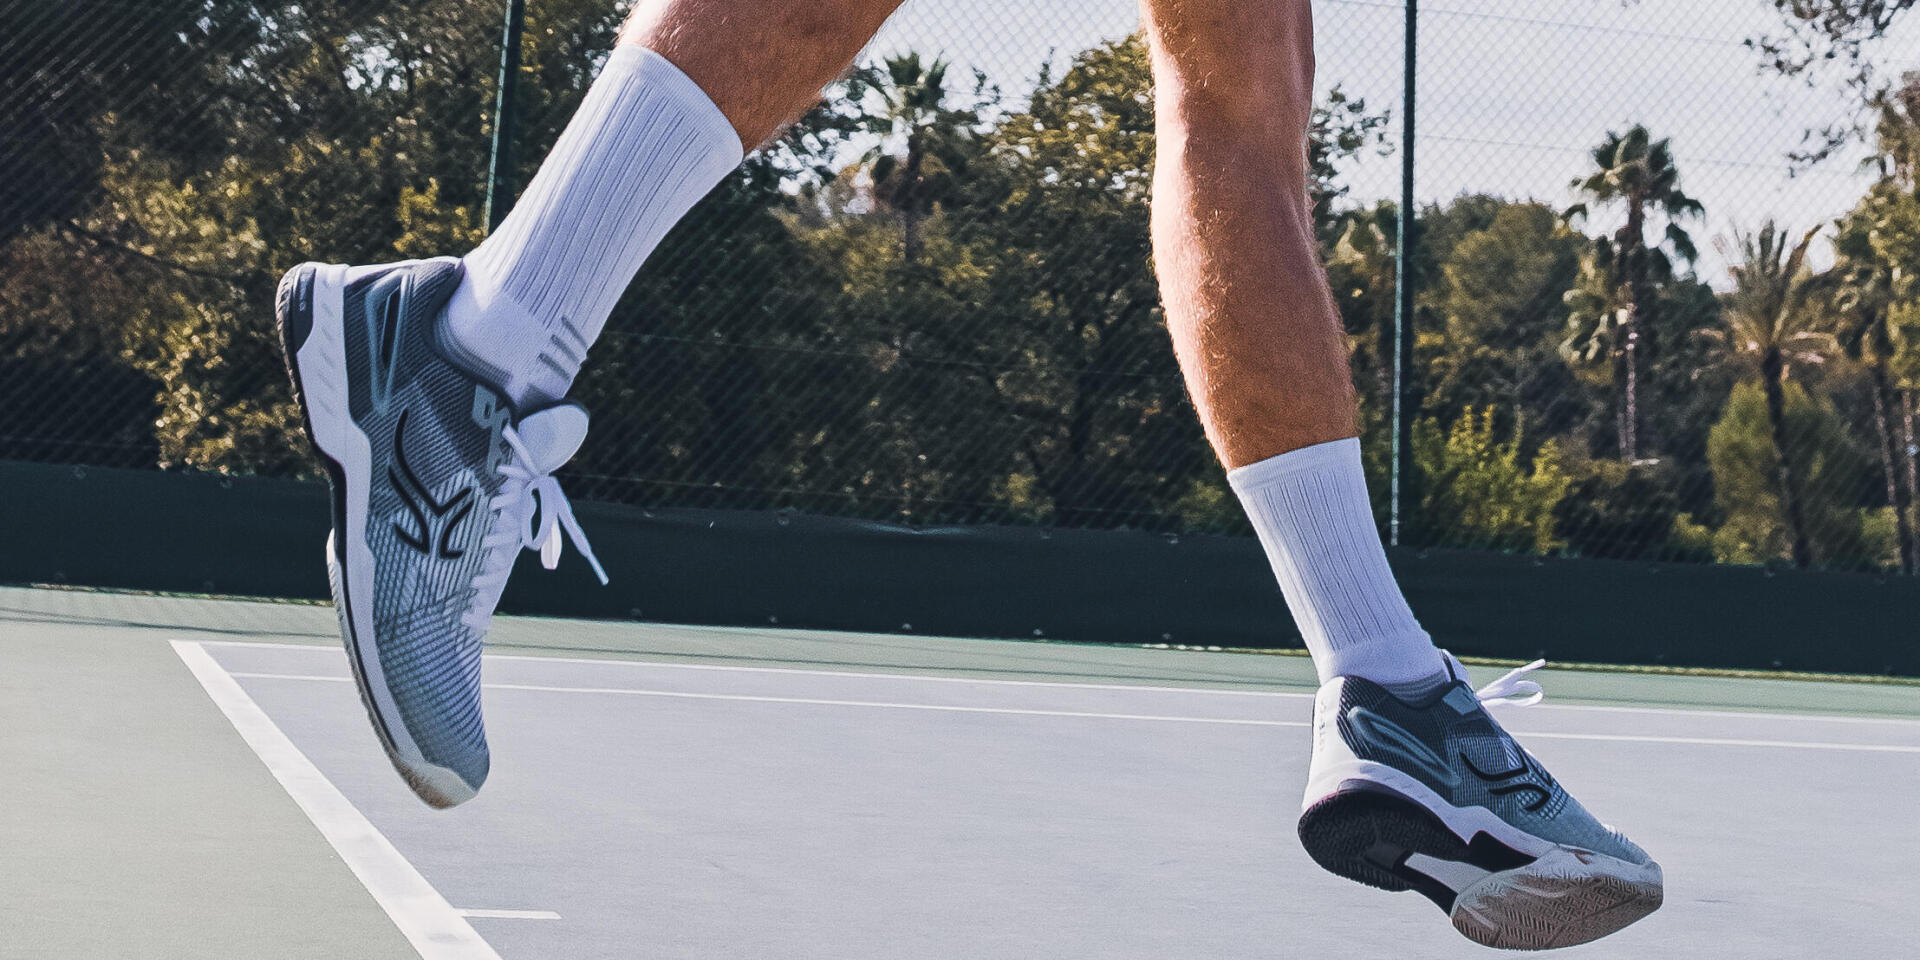 How do you choose your sports socks? (duplicate)